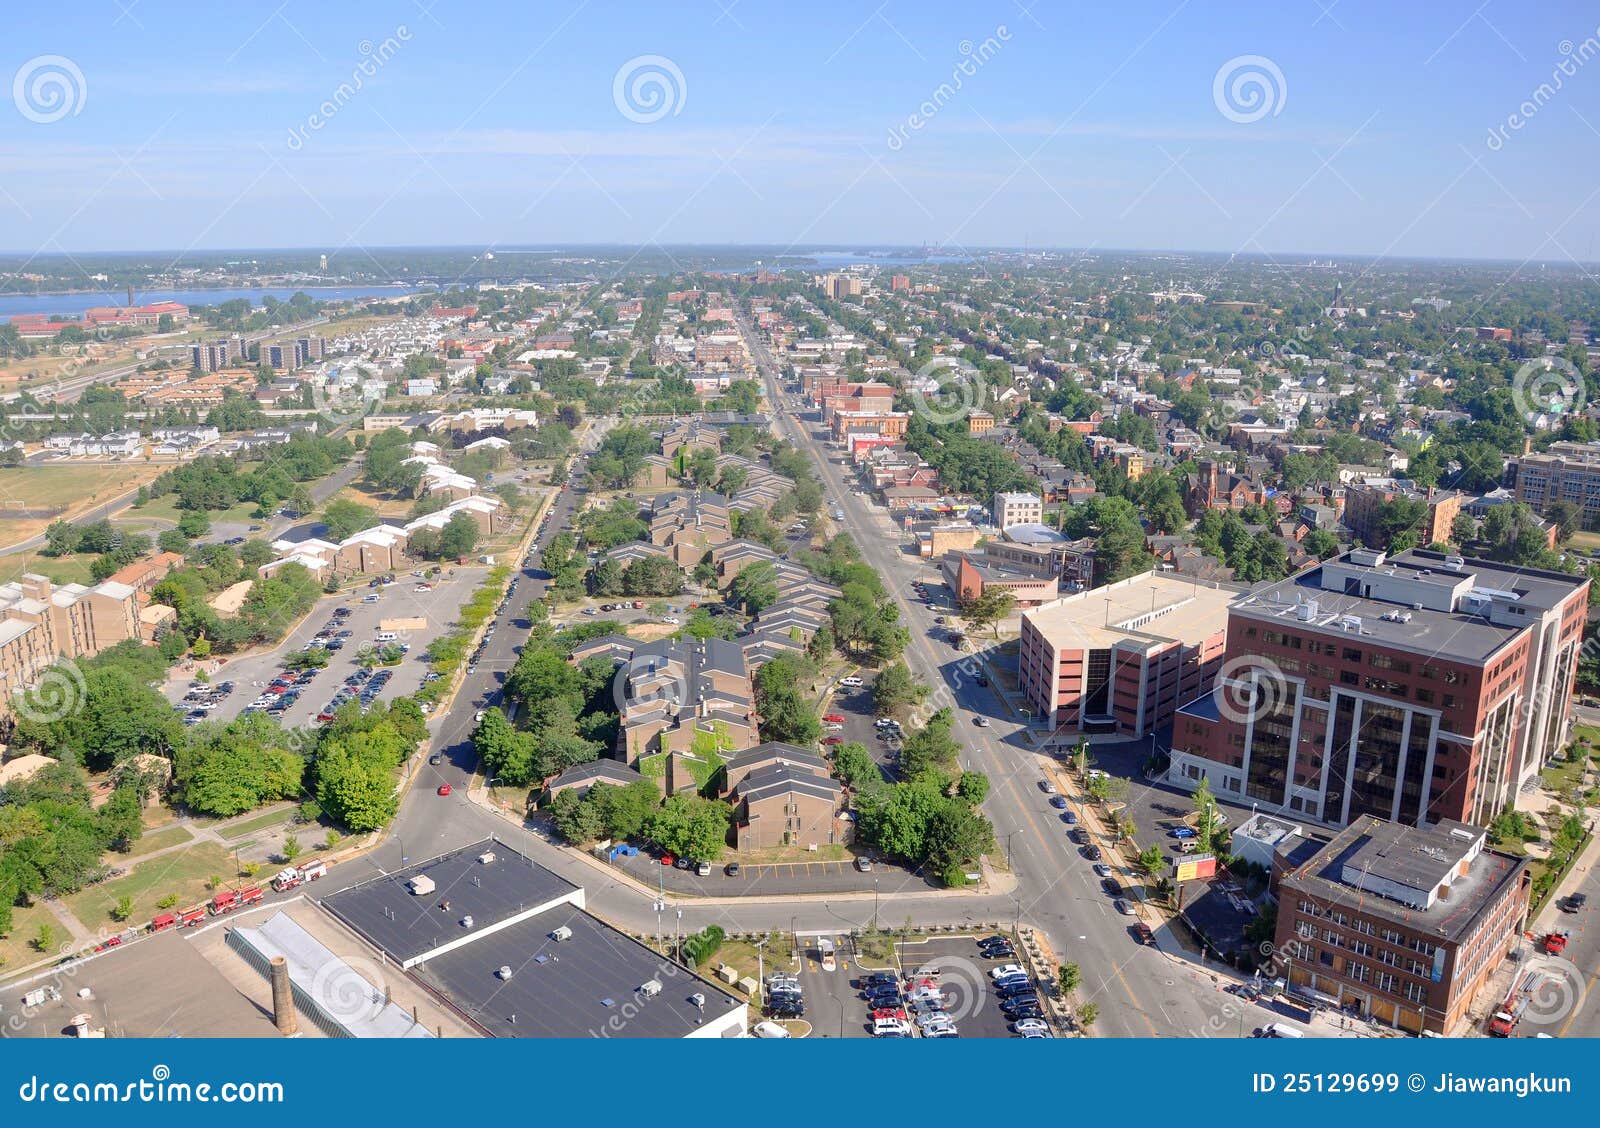 læbe Bane Rafflesia Arnoldi Buffalo City from City Hall, New York, USA Stock Image - Image of tourism,  tall: 25129699